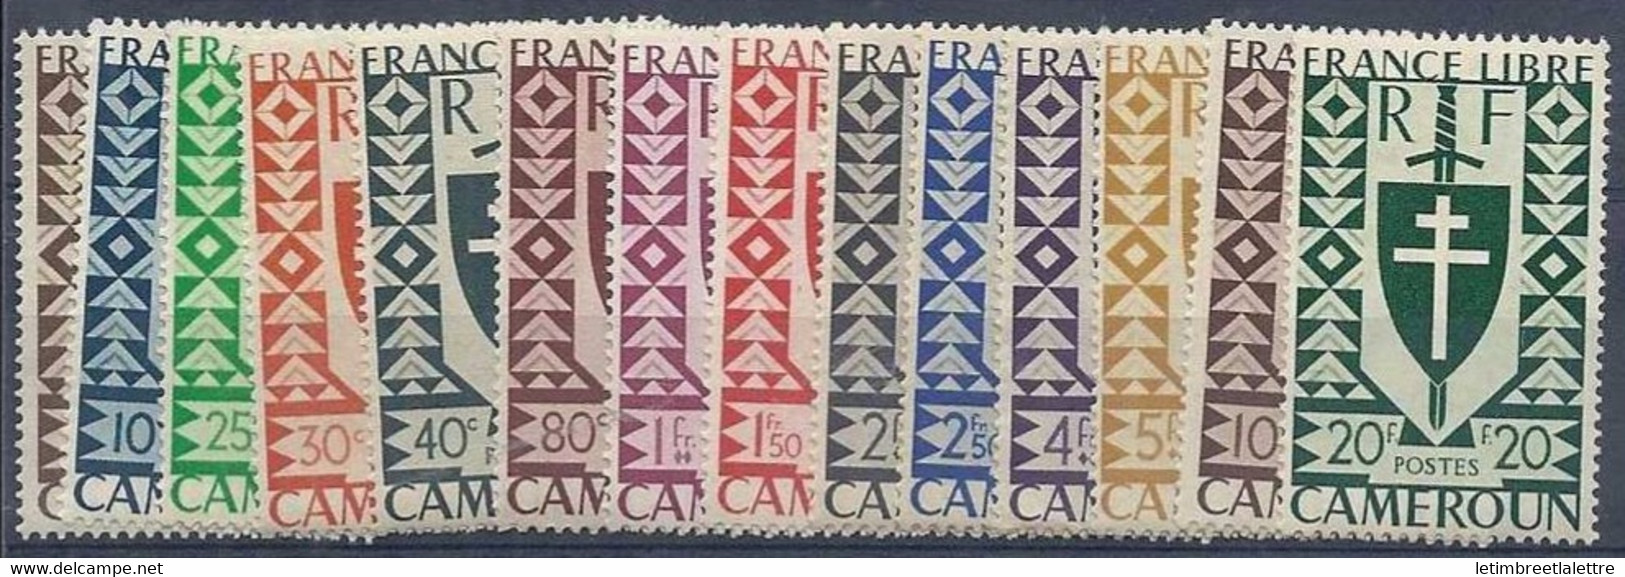 ⭐ Cameroun - YT N° 249 à 262 ** - Neuf Sans Charnière - 1941 ⭐ - Unused Stamps